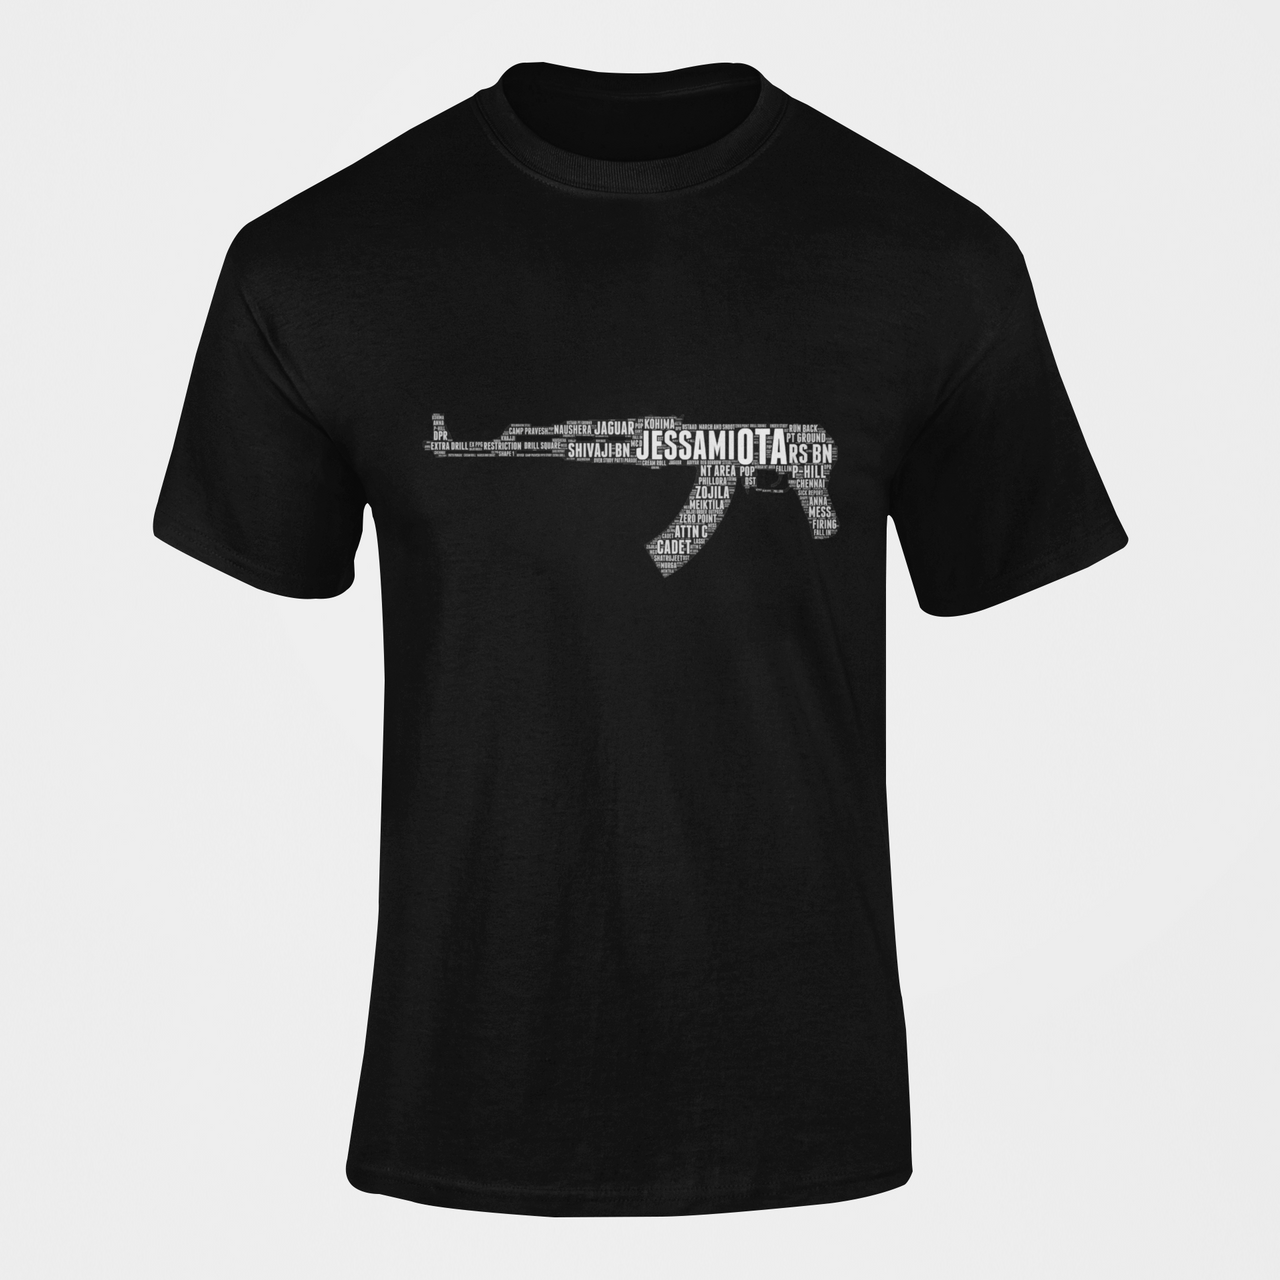 OTA T-shirt - Word Cloud Jessami - AK-47 Folding Stock (Men)